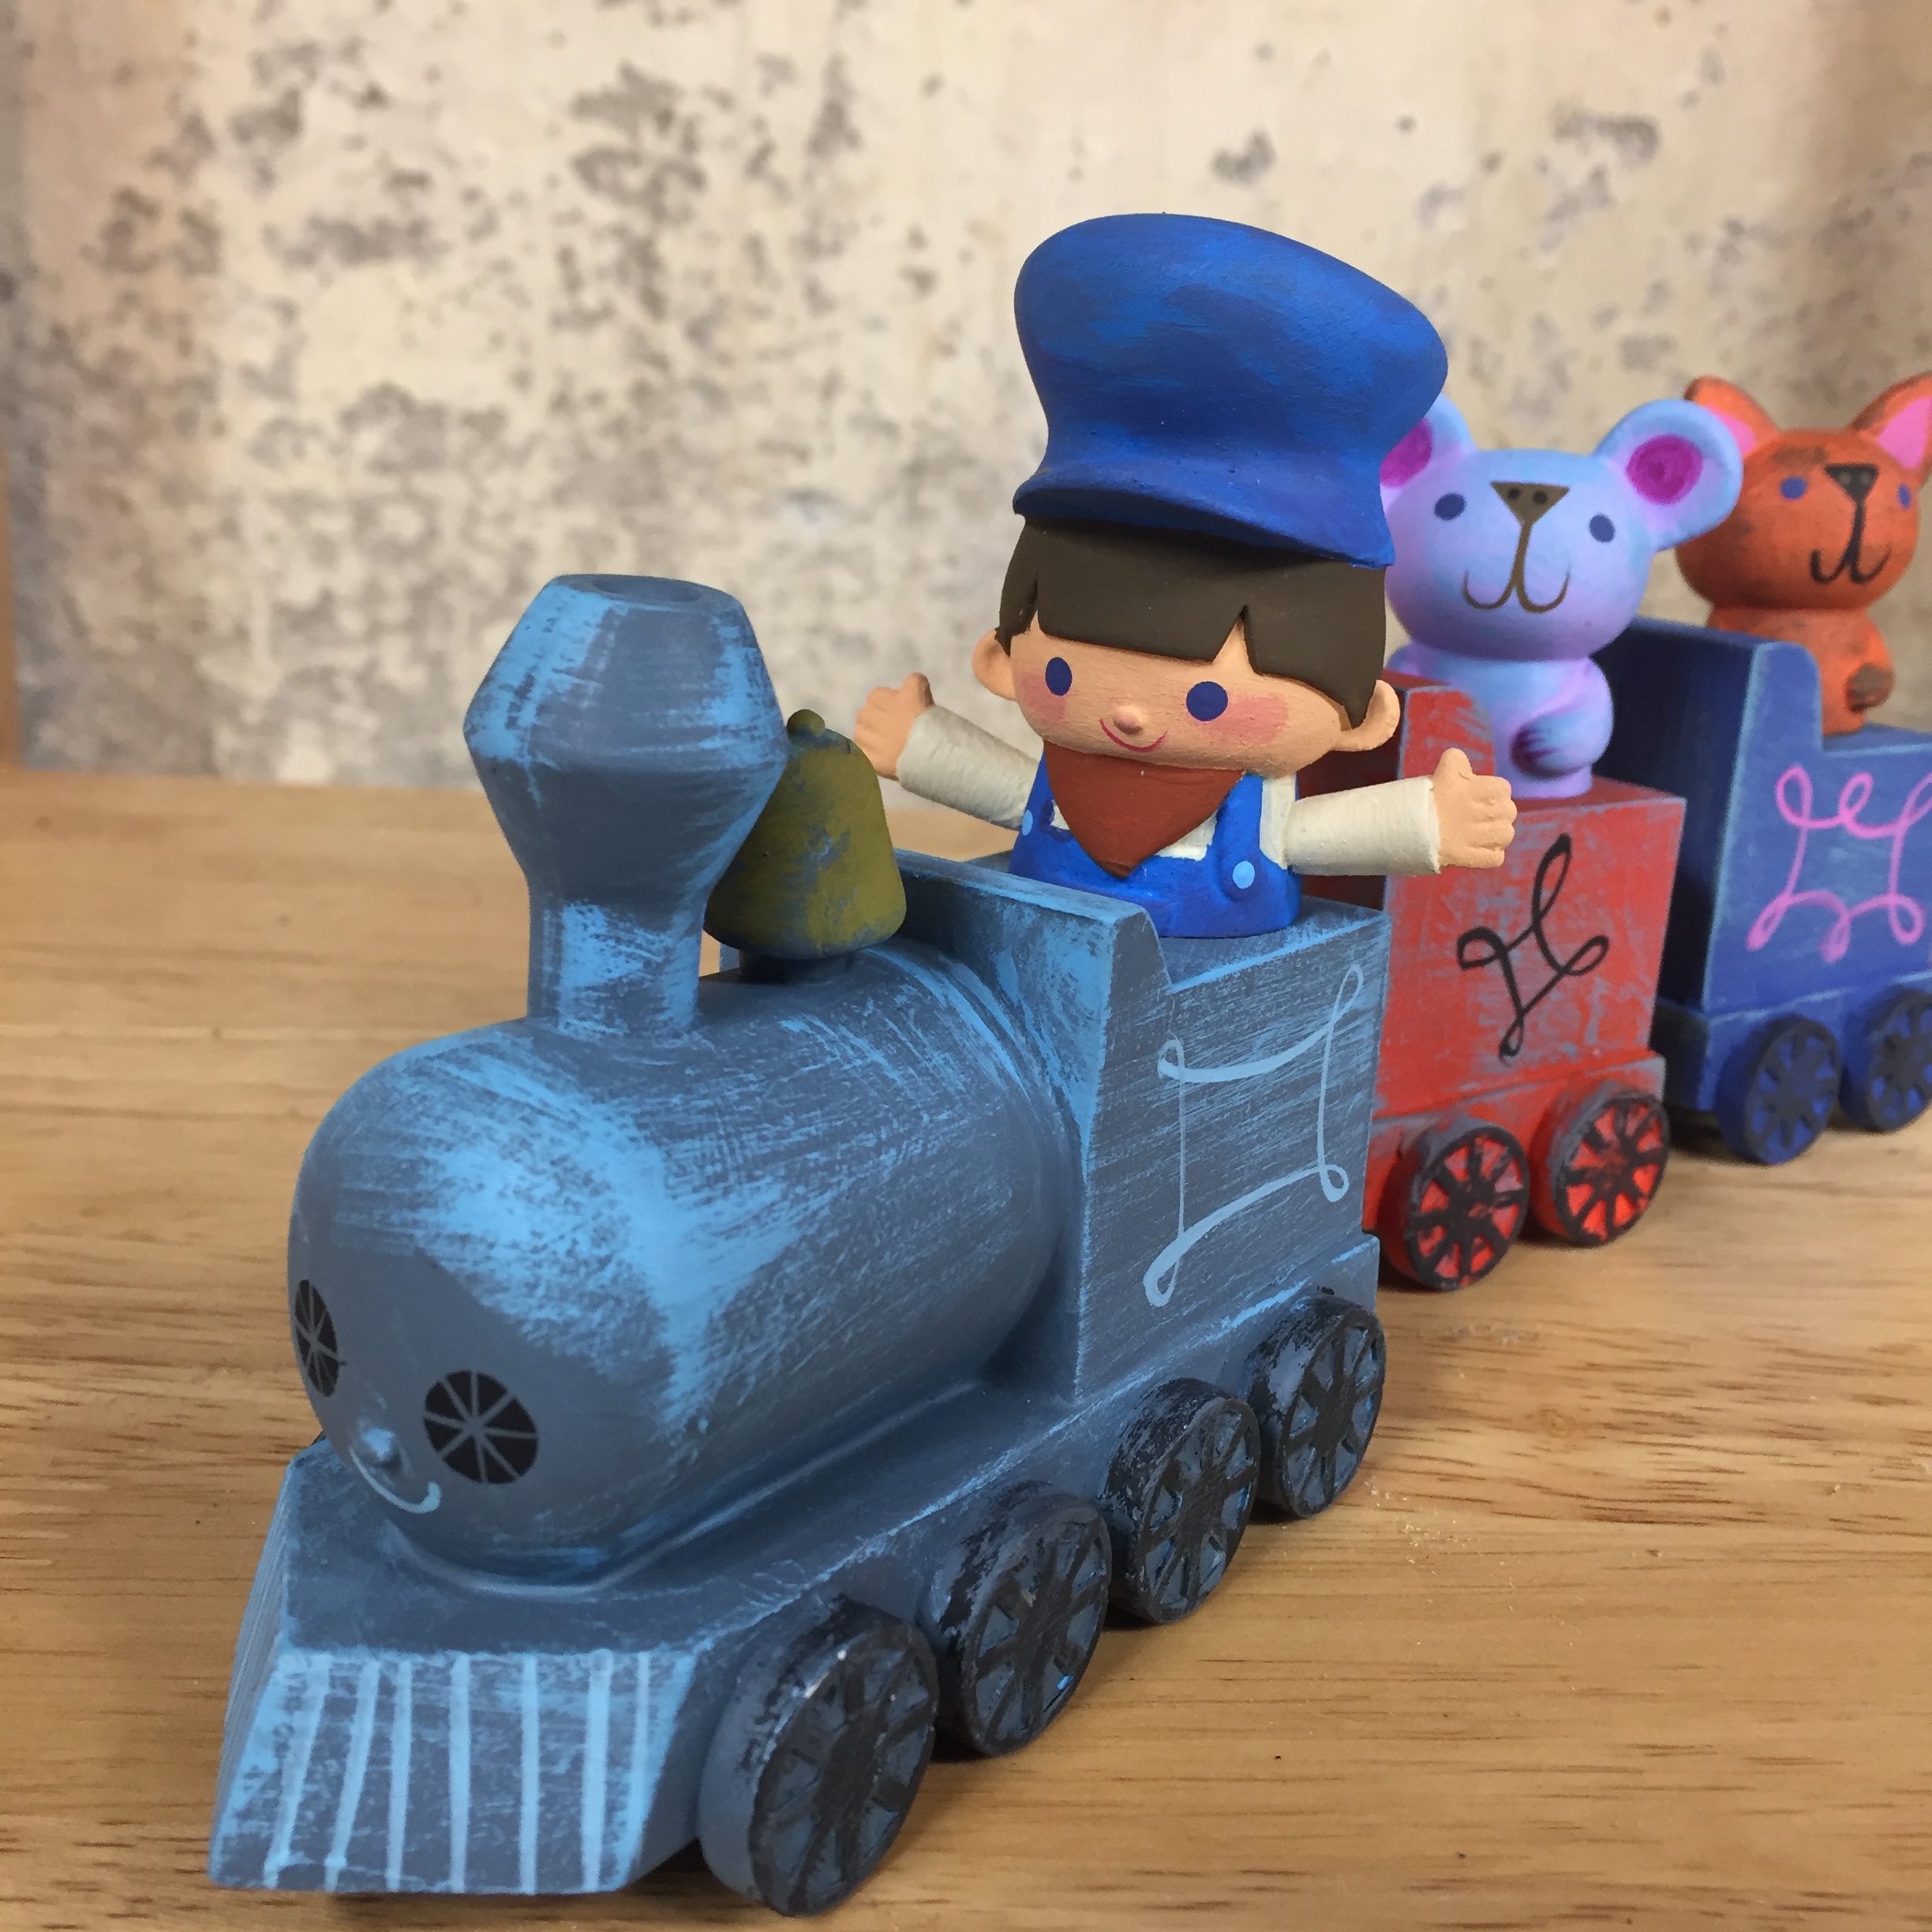 Locomotion Set Resin Art Toy by Itokin Park, Amanda Visell, Michelle Valigura